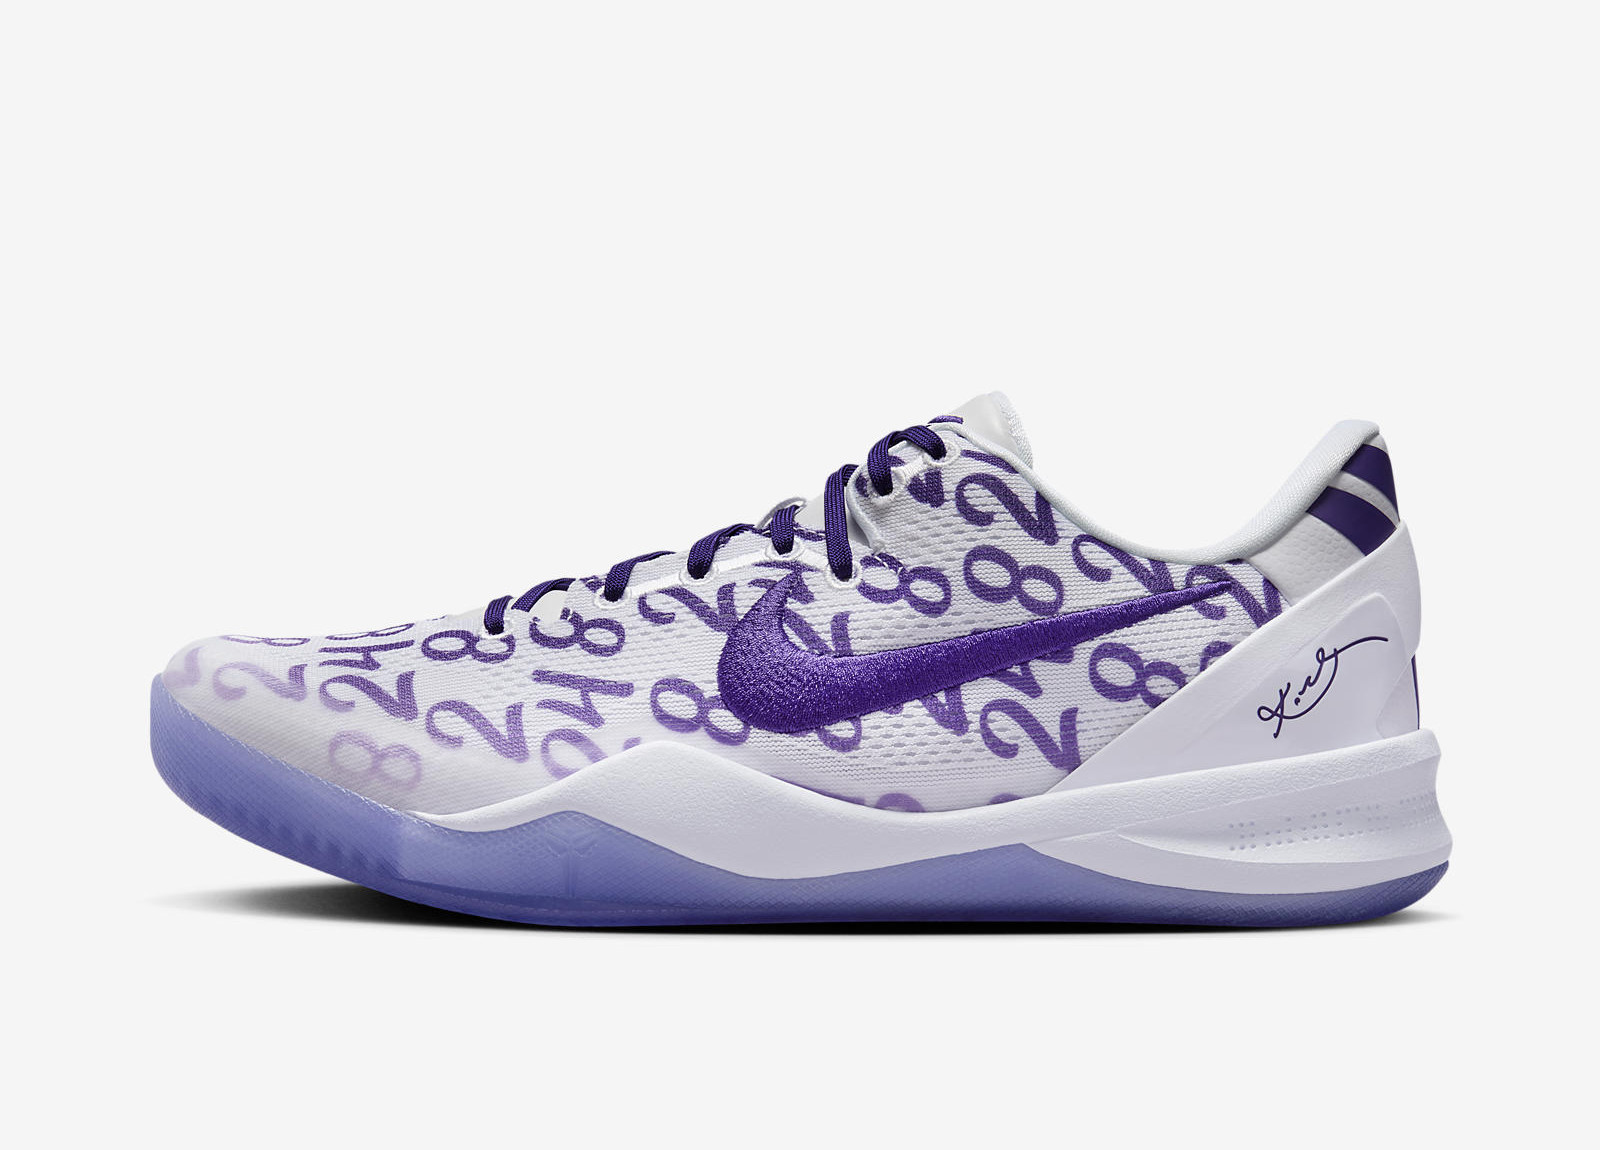 Nike Kobe 8 Protro
« Court Purple »